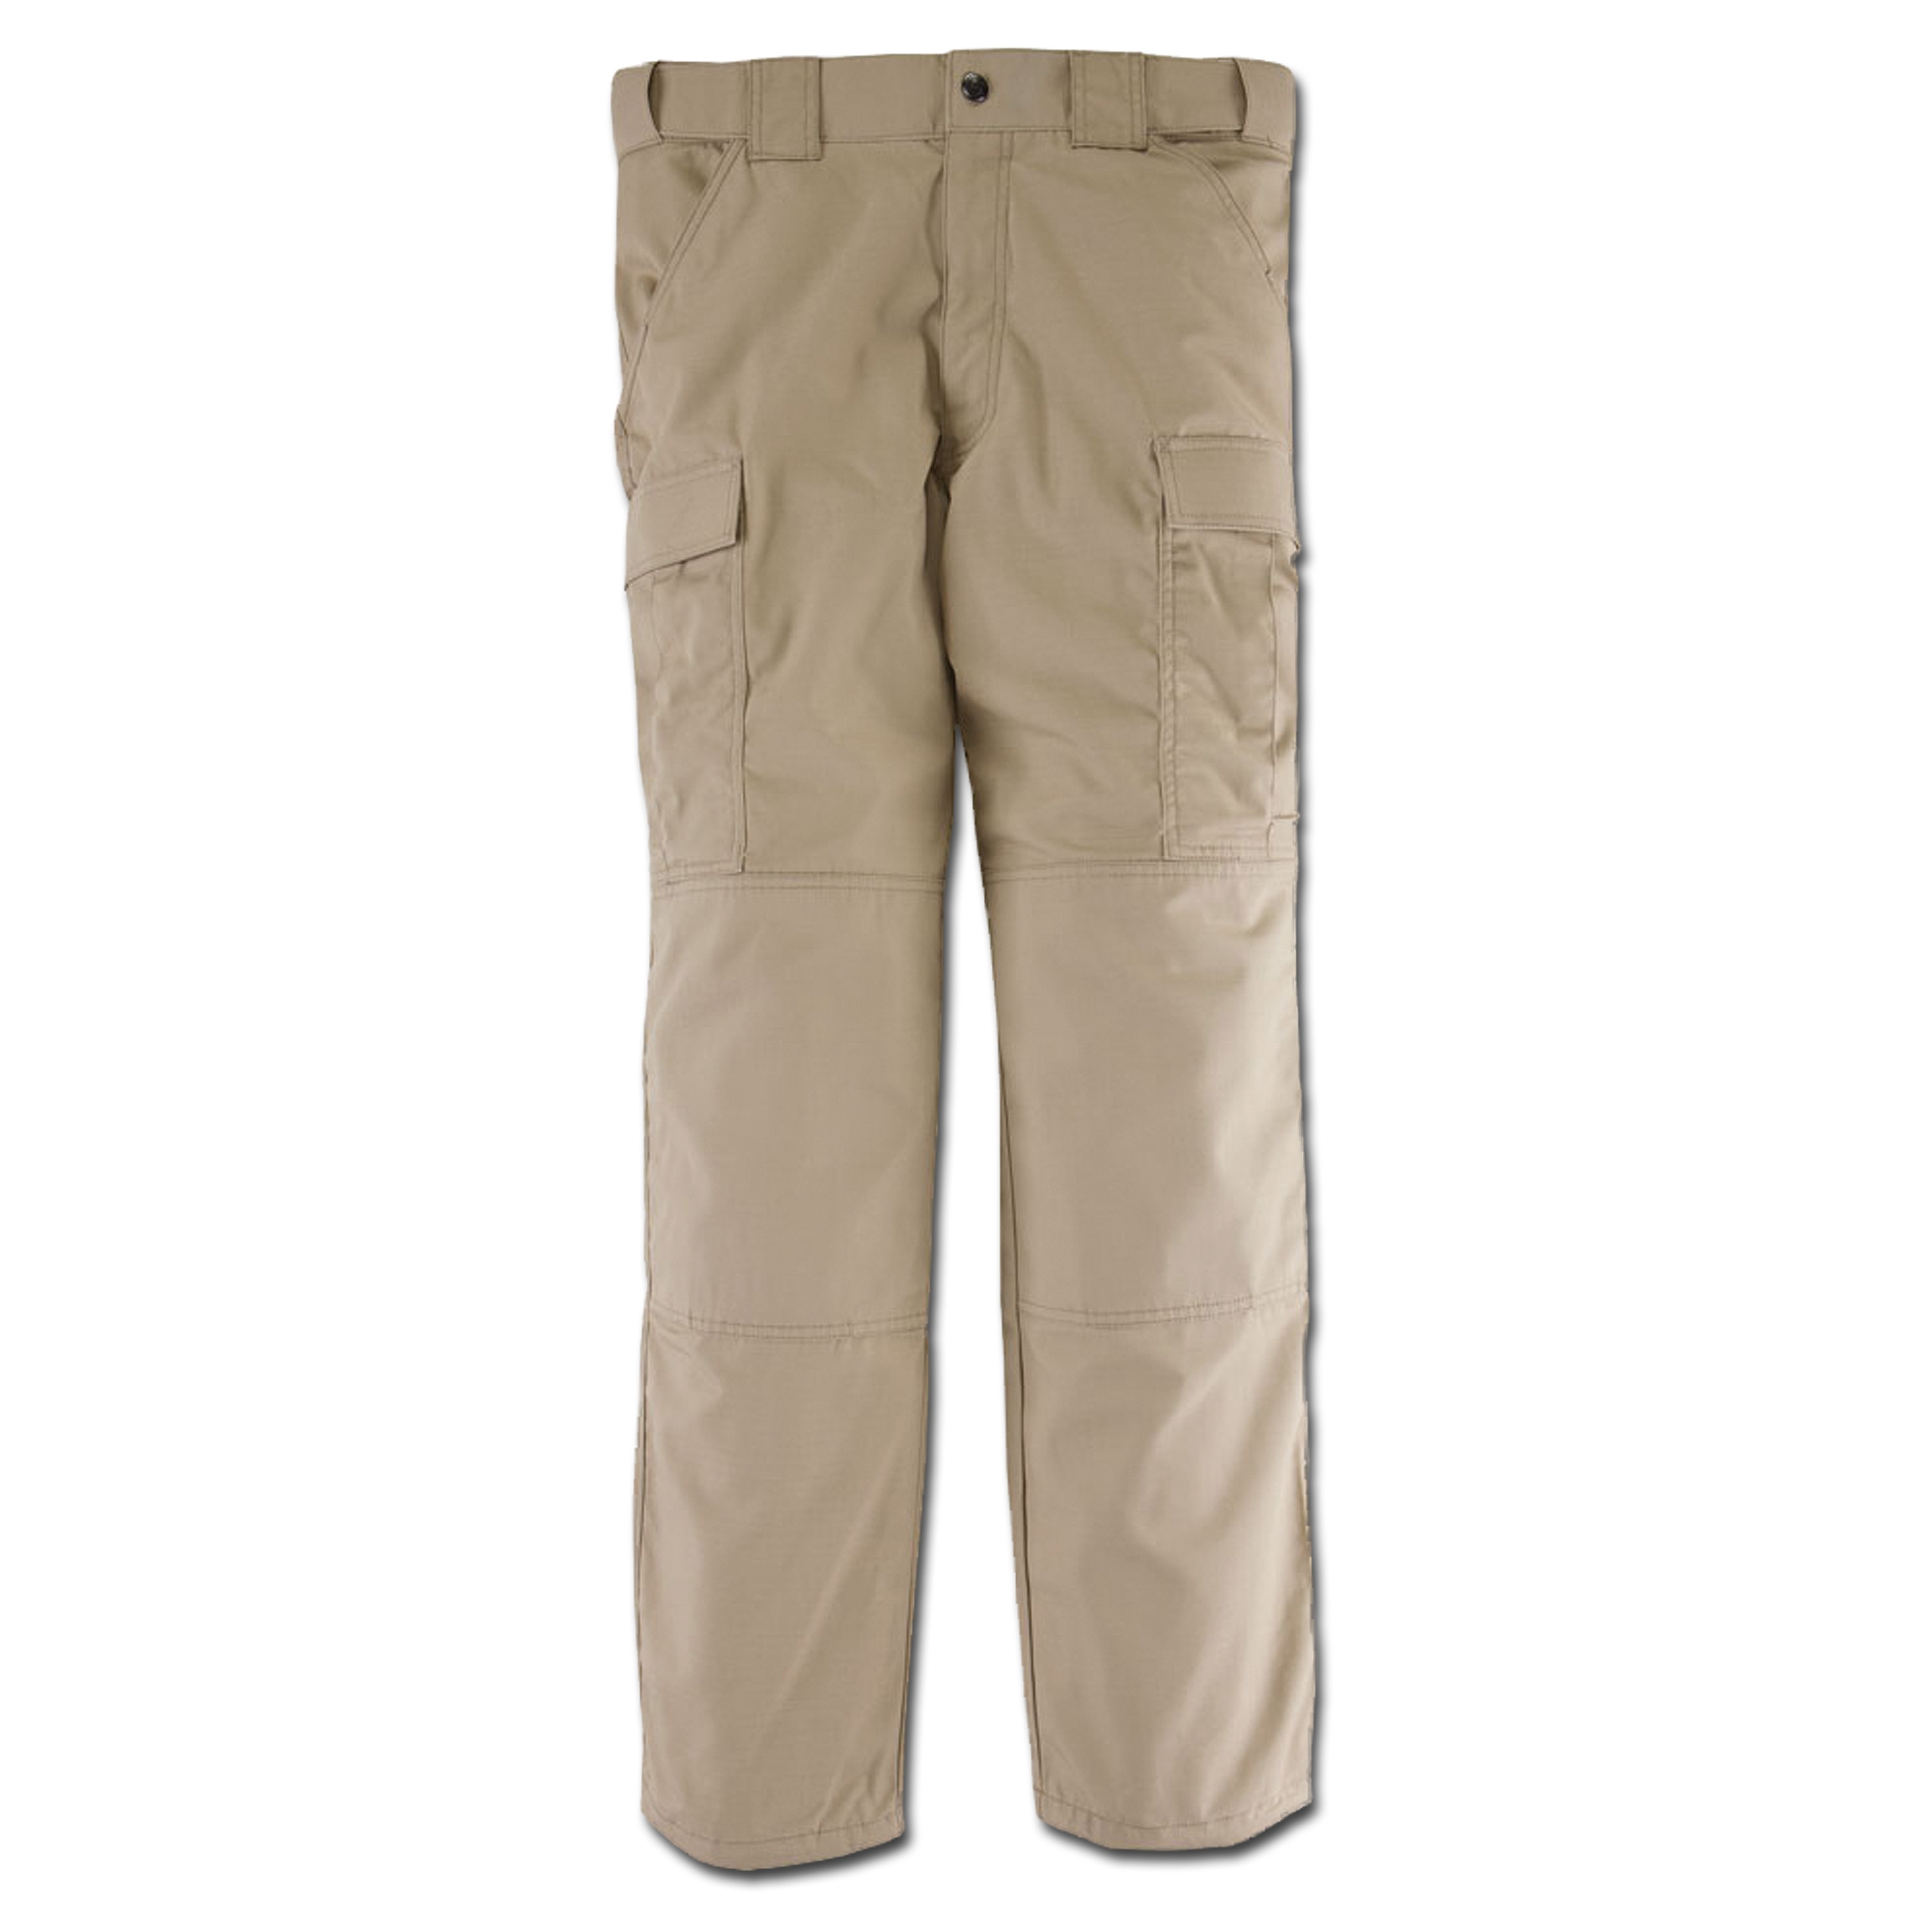 Purchase the 5.11 Ripstop TDU Pants khaki by ASMC